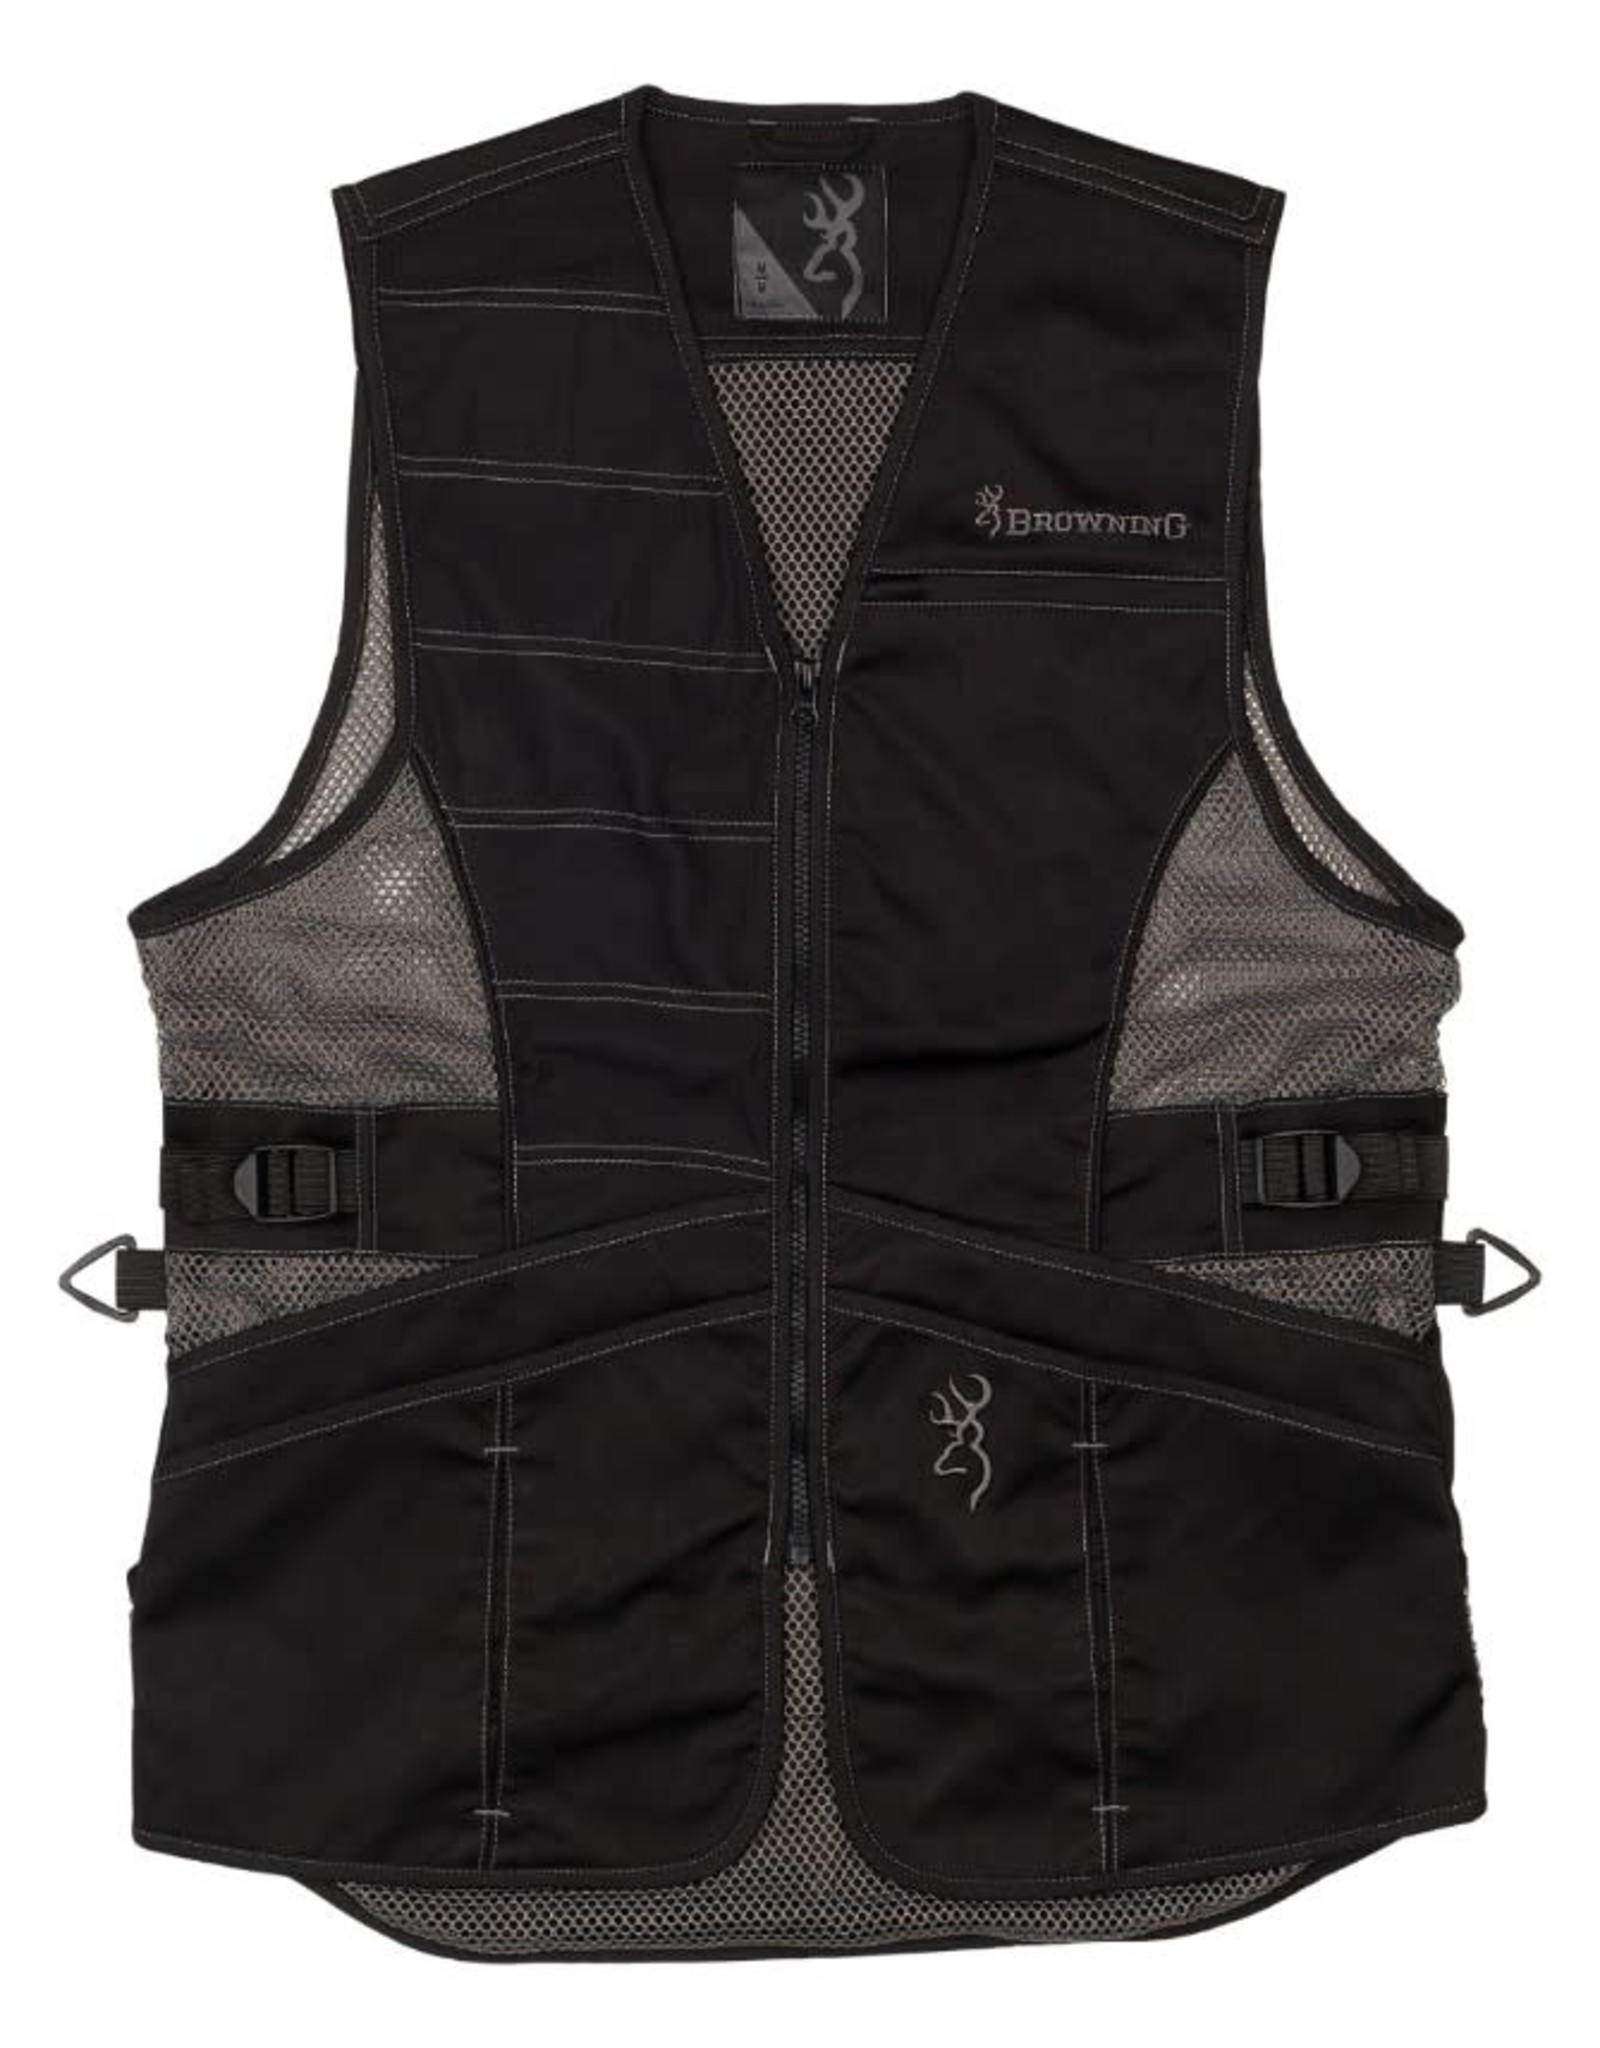 Browning Ace Shooting Vest for Her - Blk/Blk - LG